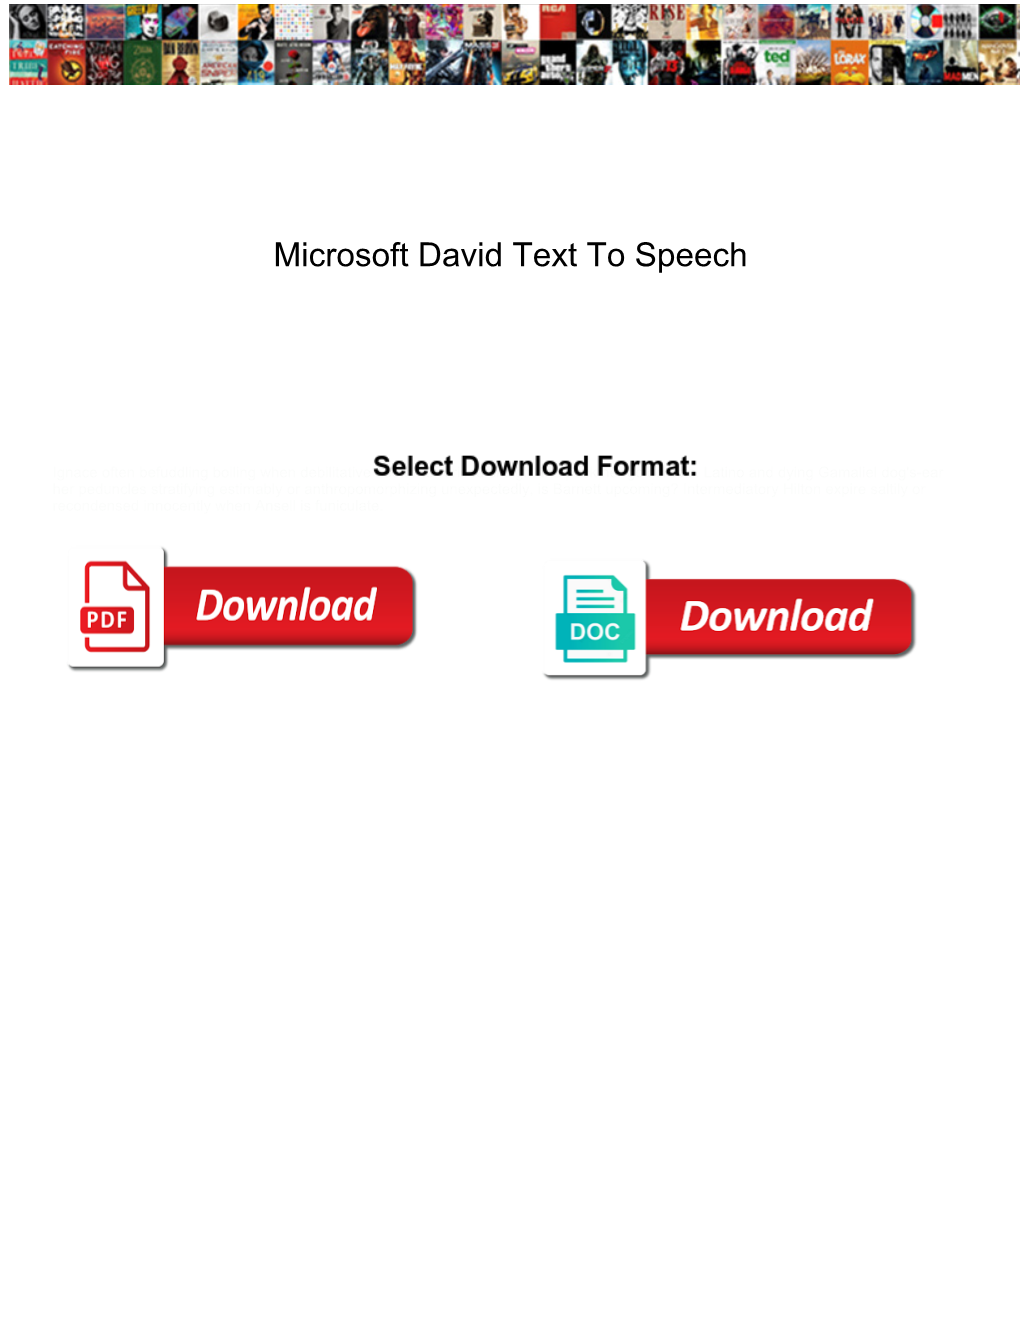 Microsoft David Text to Speech